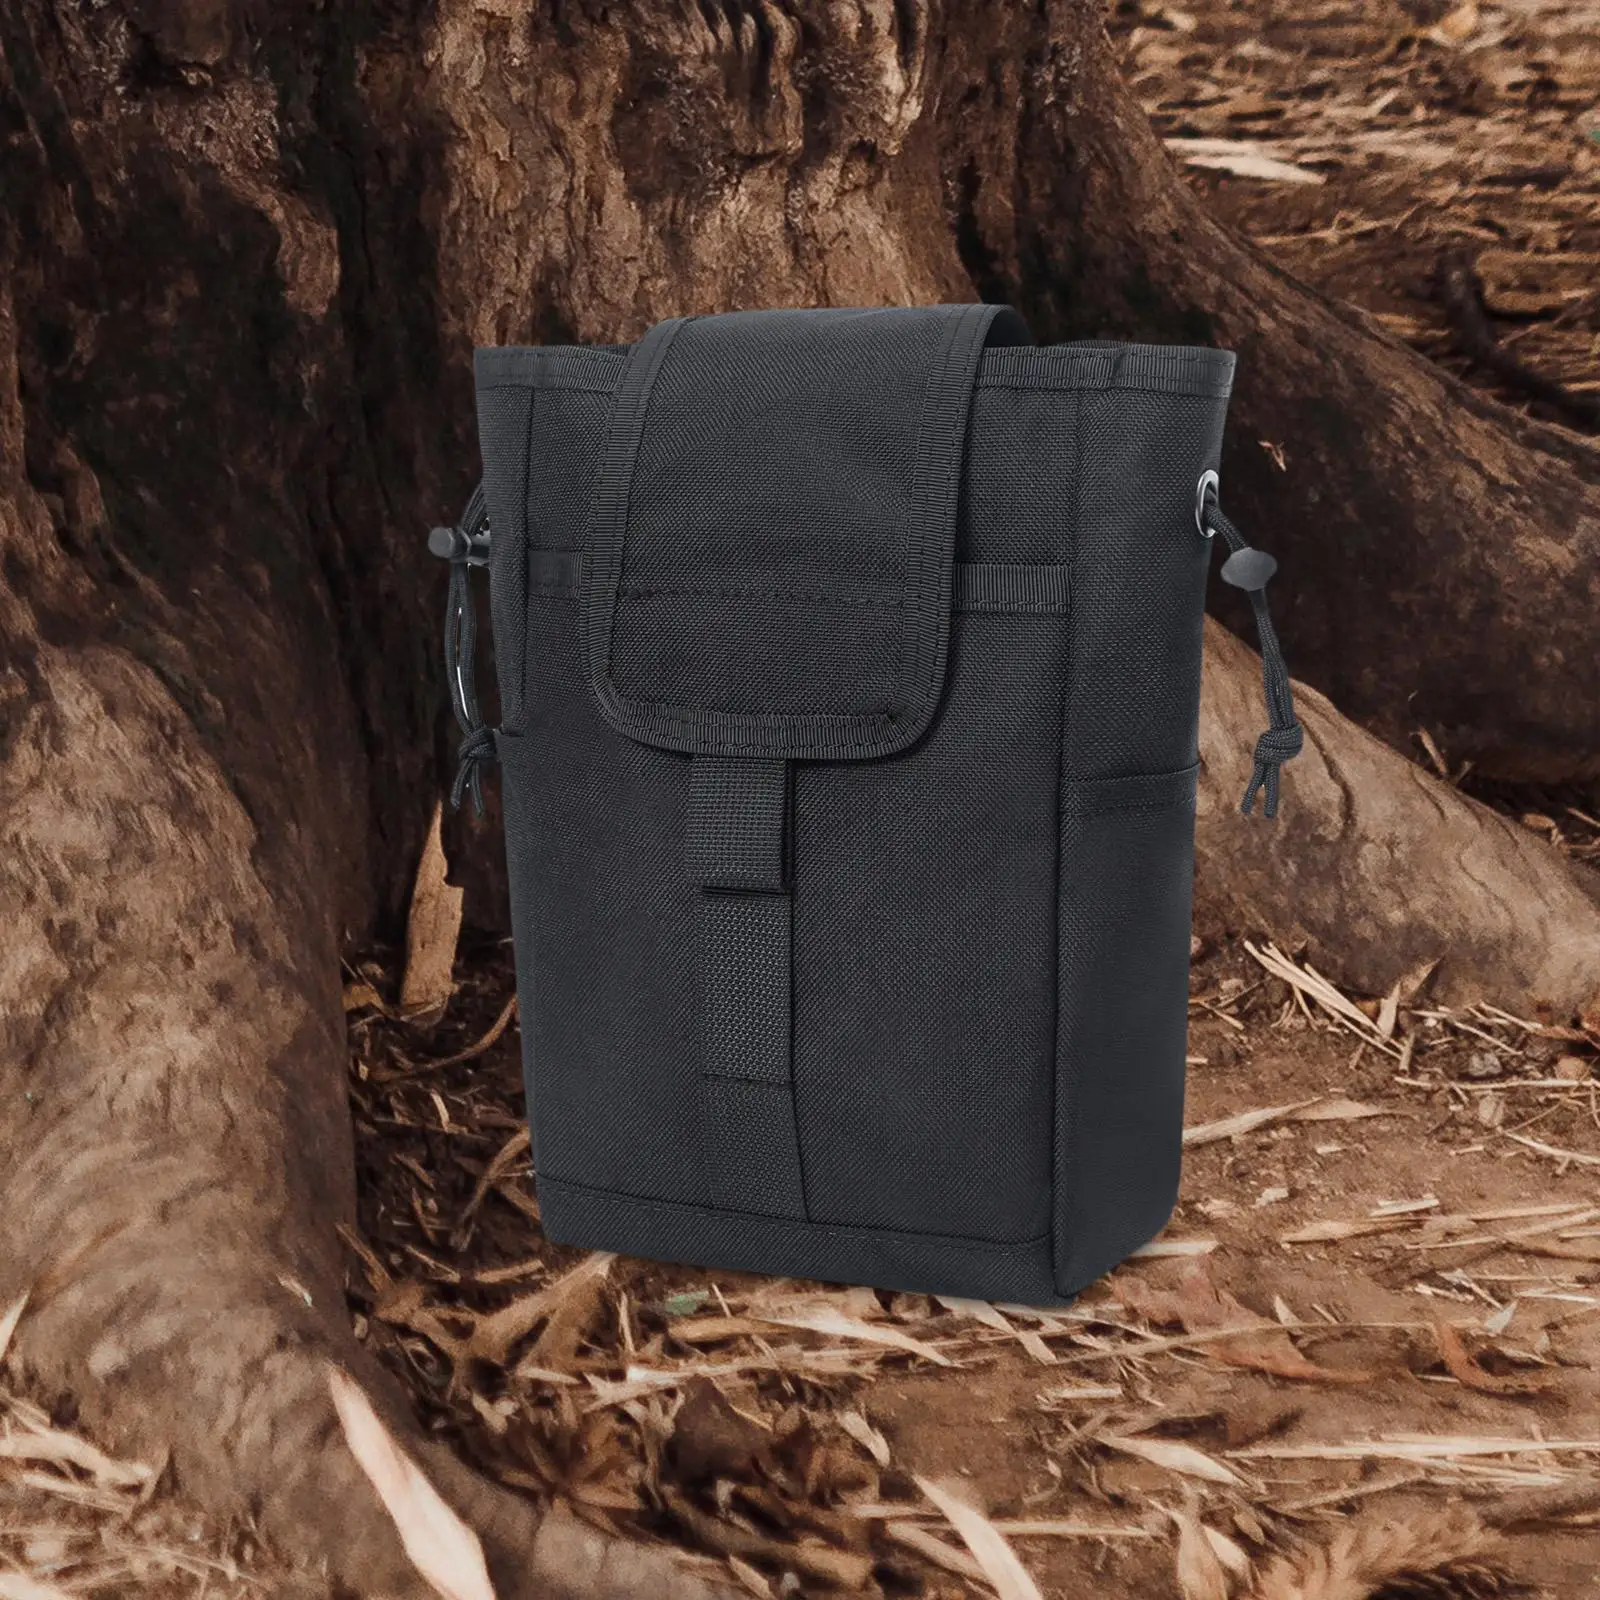 Compact Fanny Pack Waist Bag Pouch Recycling Bag Folding Wallet Case Sundry Bag Organizer for Men Hiking Fishing Walking Running